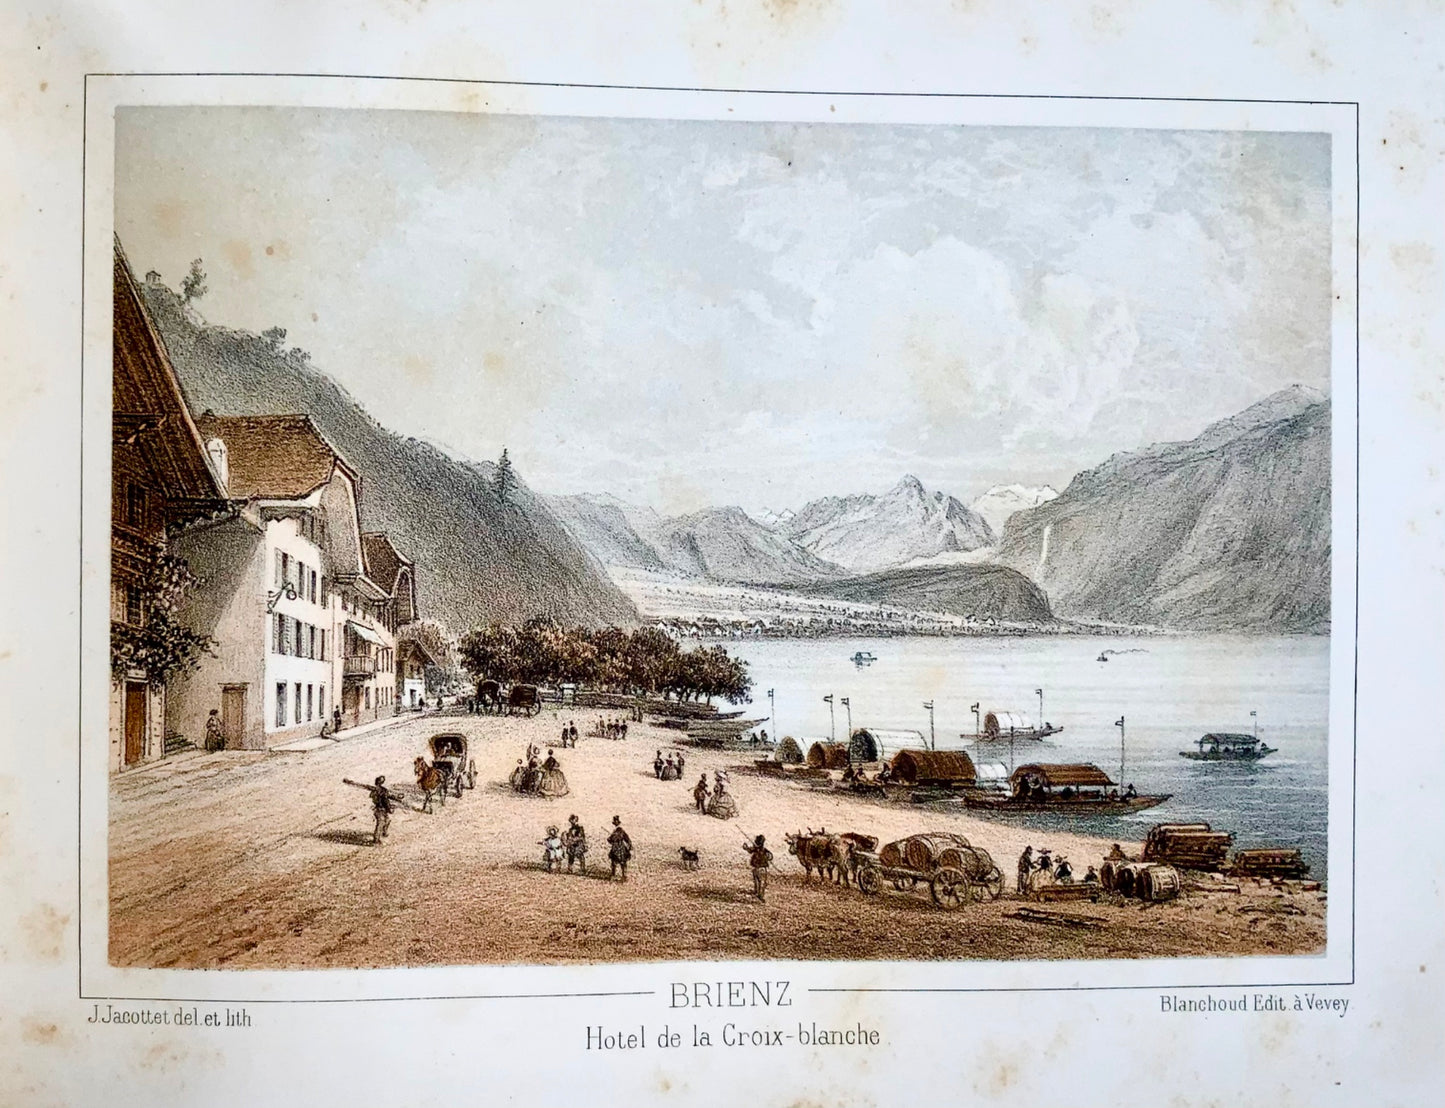 1850 Souvenir album, 19 toned lithographs of Bernese Oberland, Switzerland